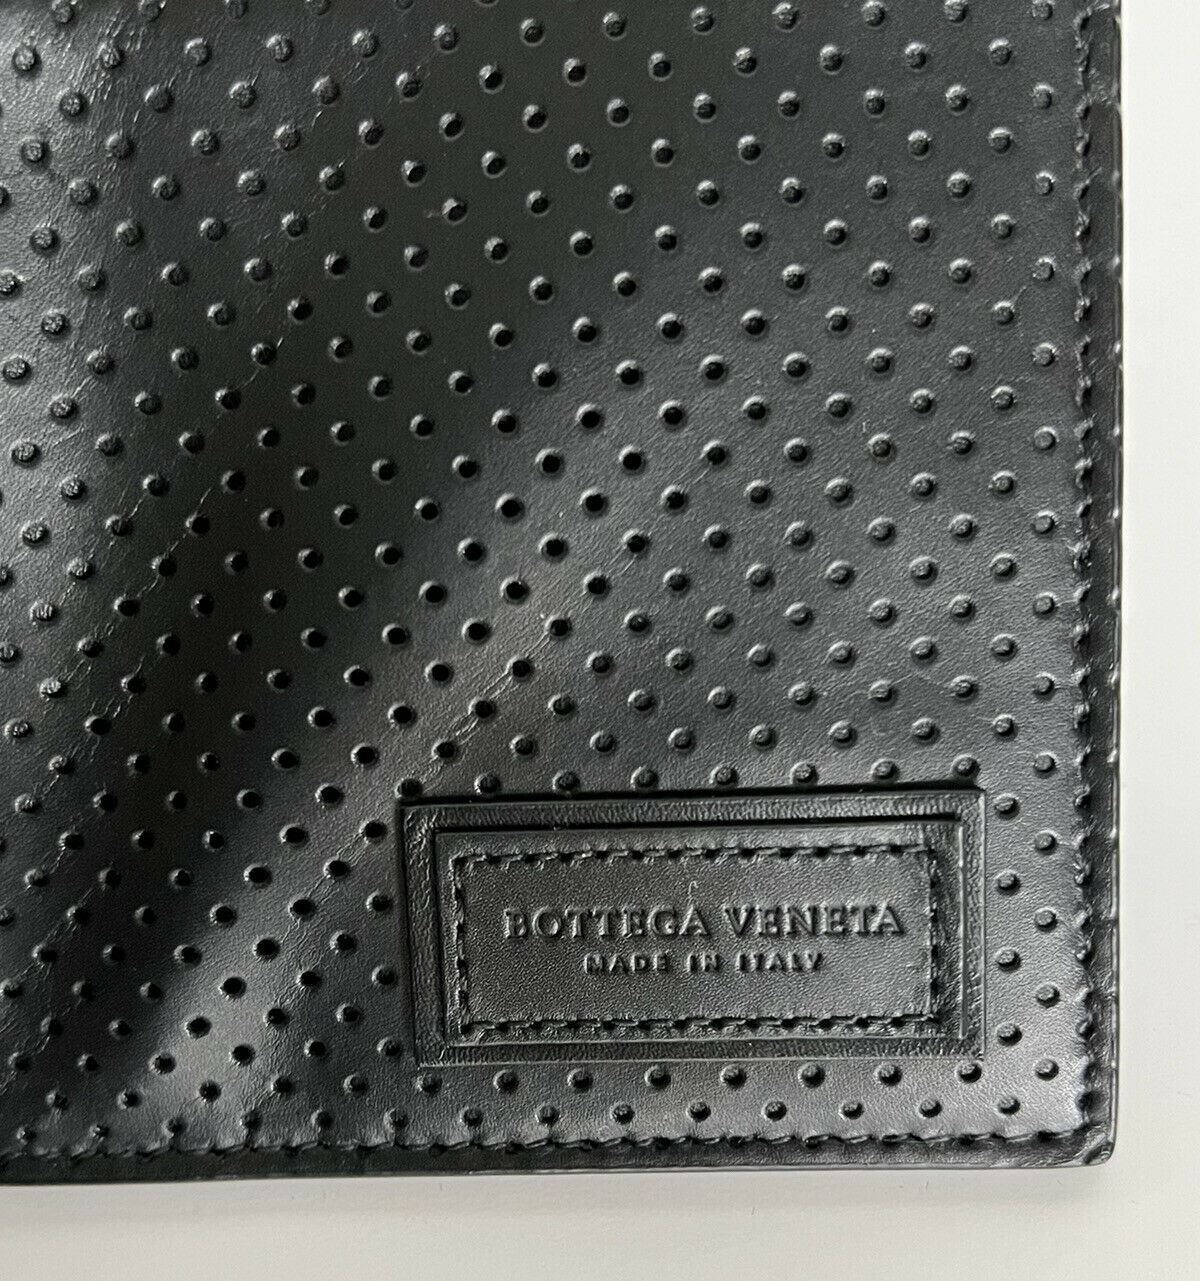 NWT $440 Bottega Veneta Men's Leather BiFold Wallet Black 113993 Made in Italy